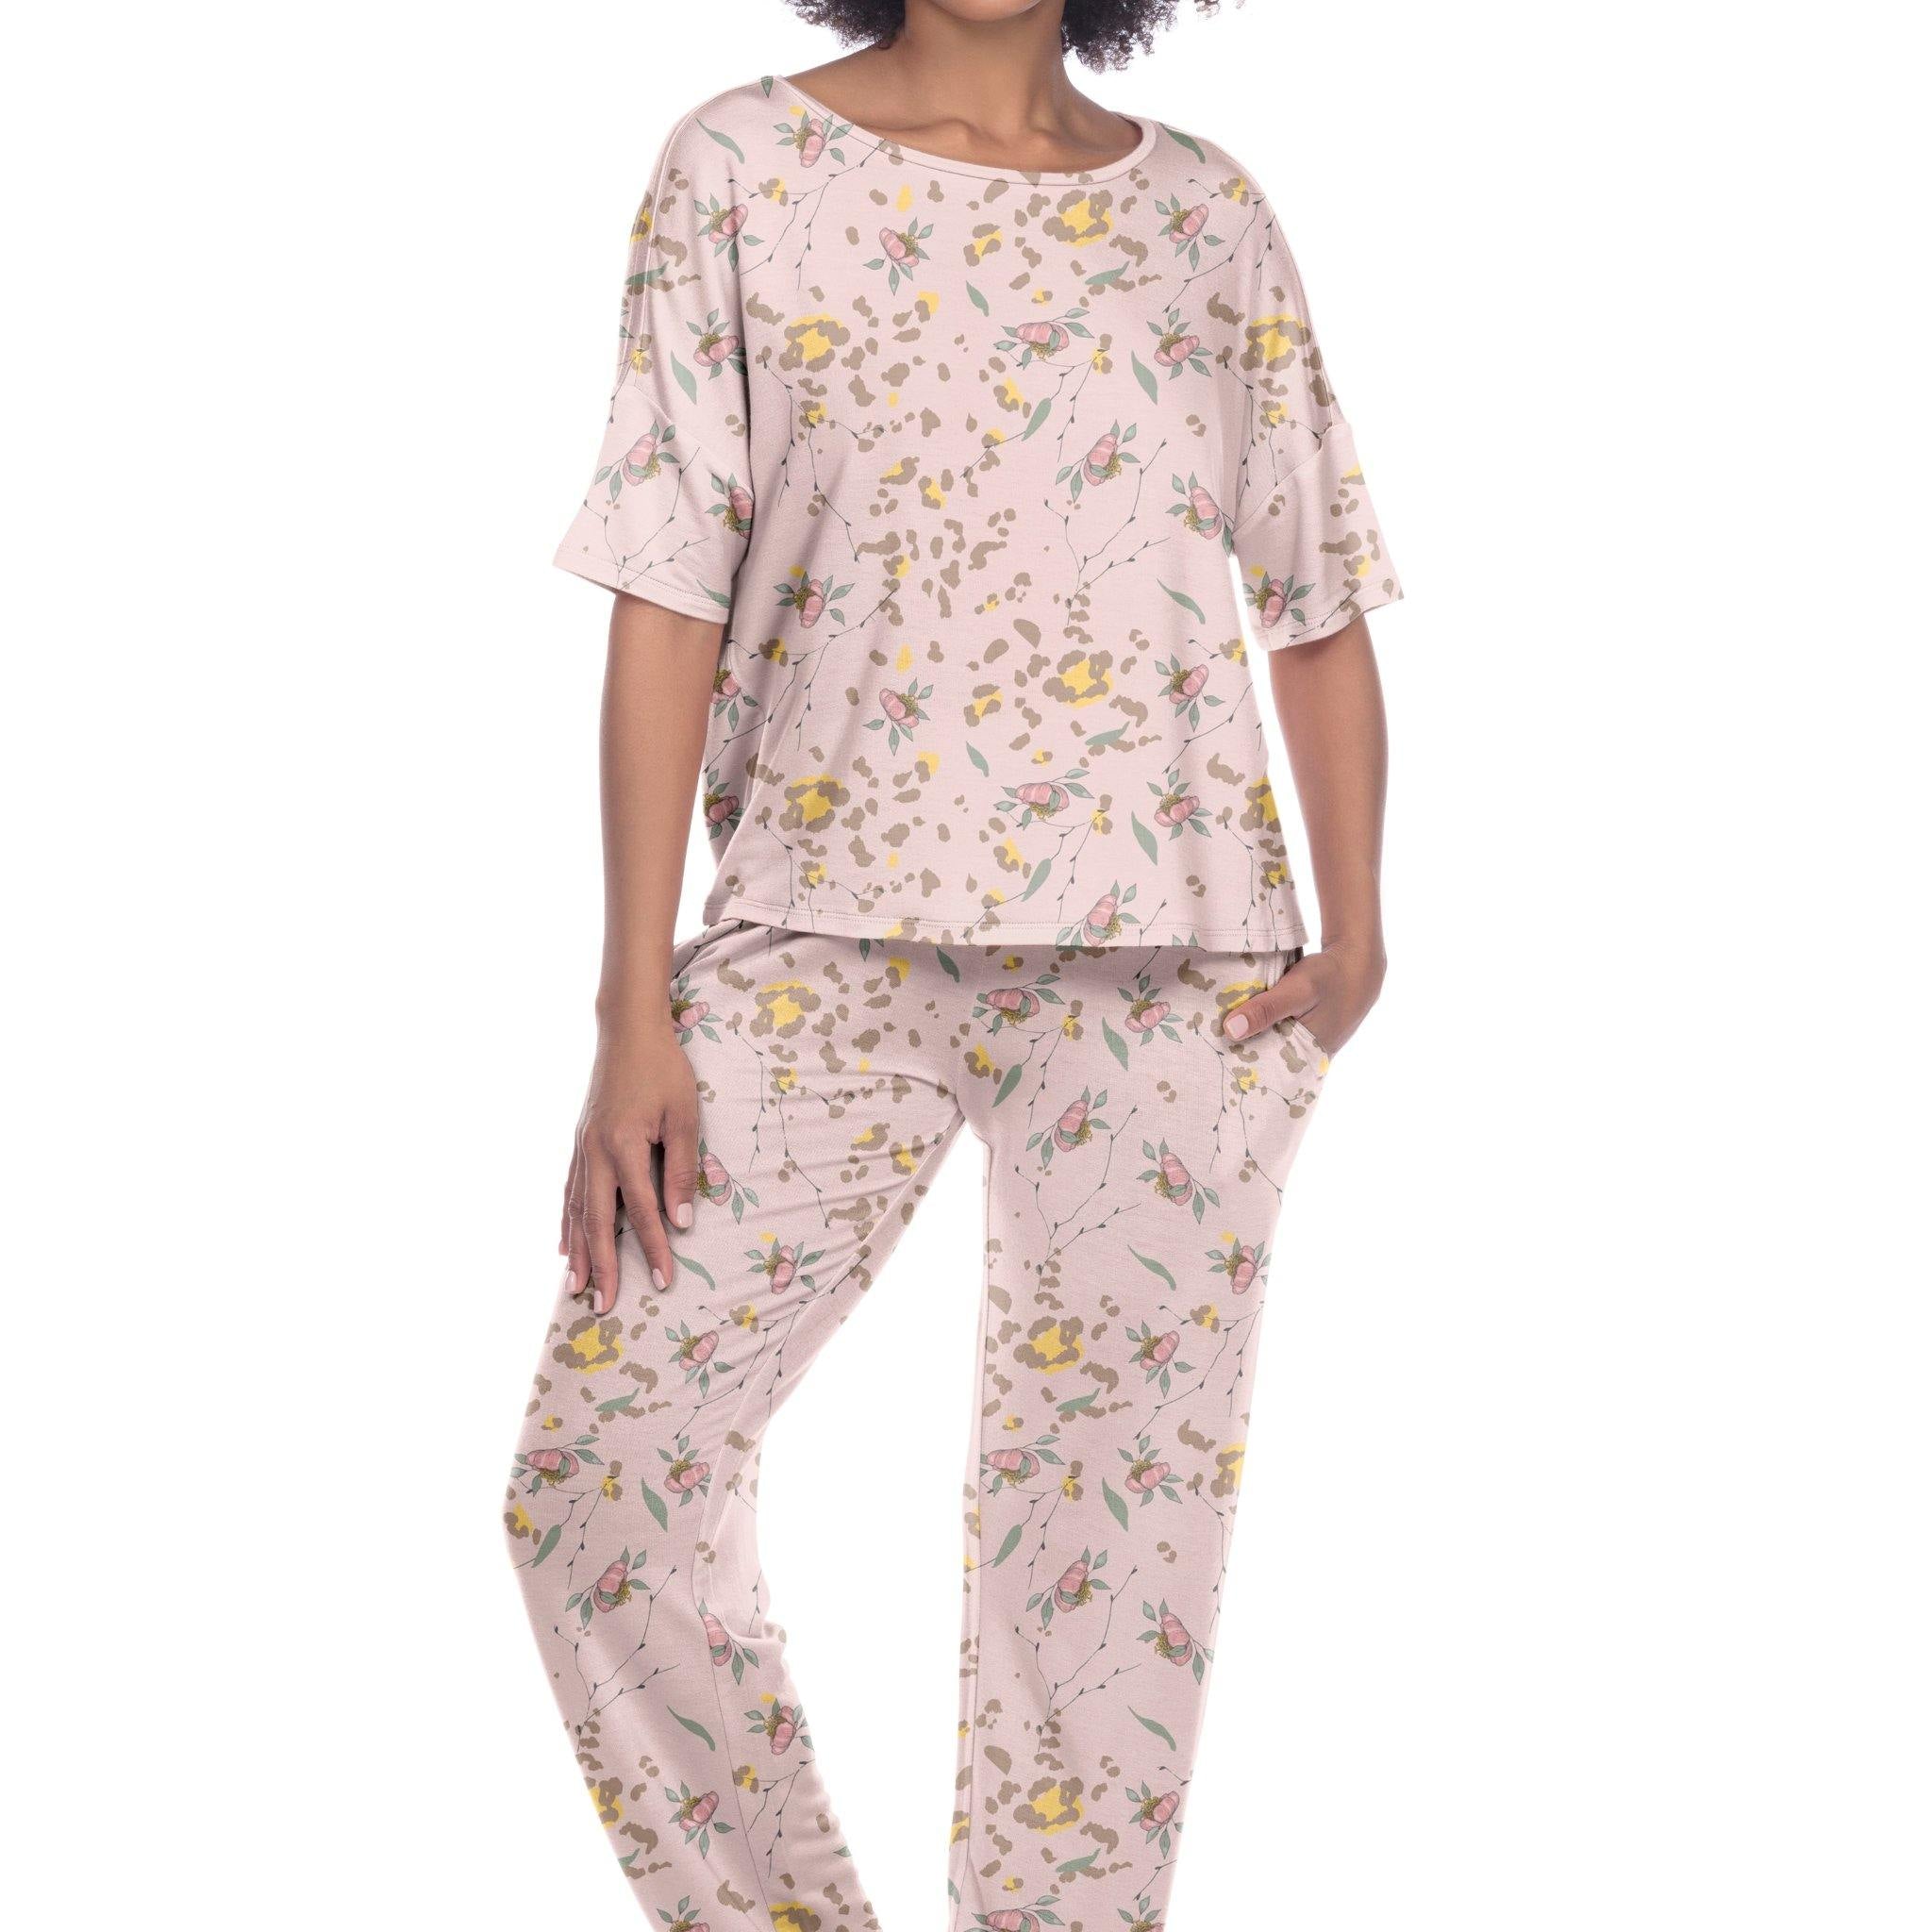 Sun Lover PJ Set - Sleepwear & Loungewear - Sandcastle Floral